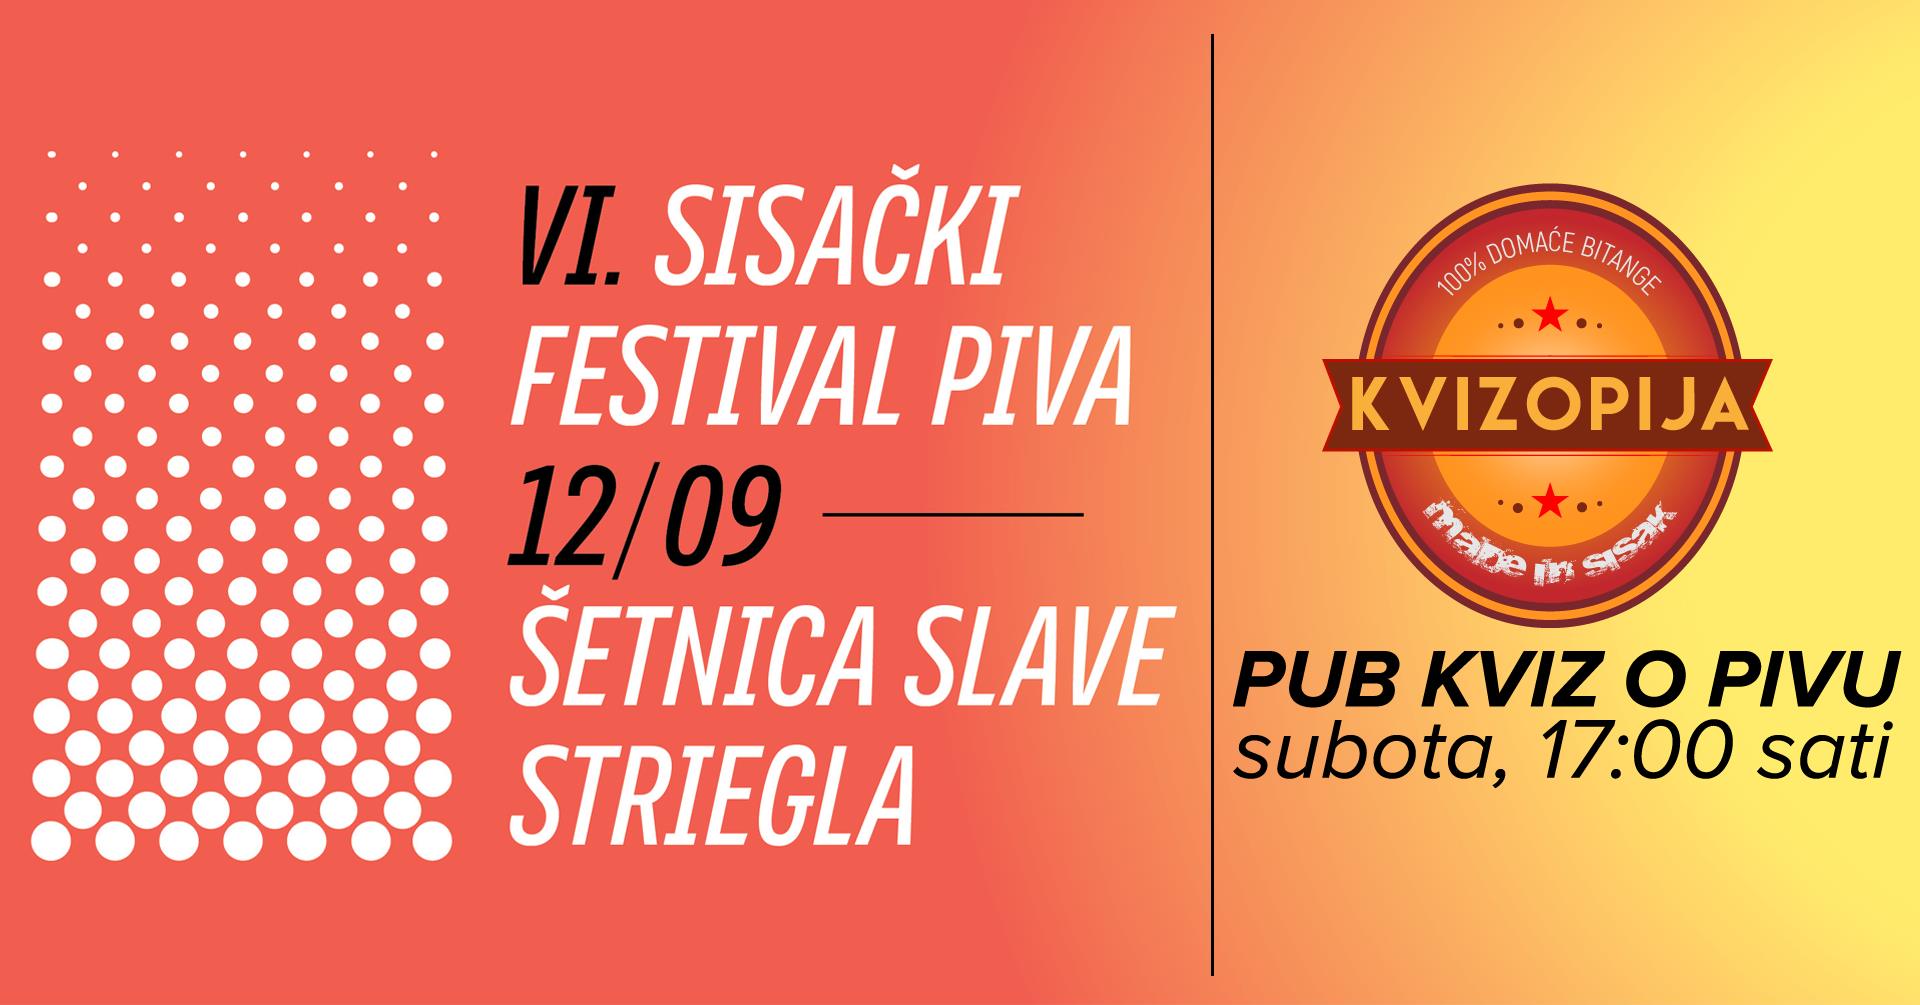 You are currently viewing Pub kviz posvećen pivu – 6. Sisački festival piva